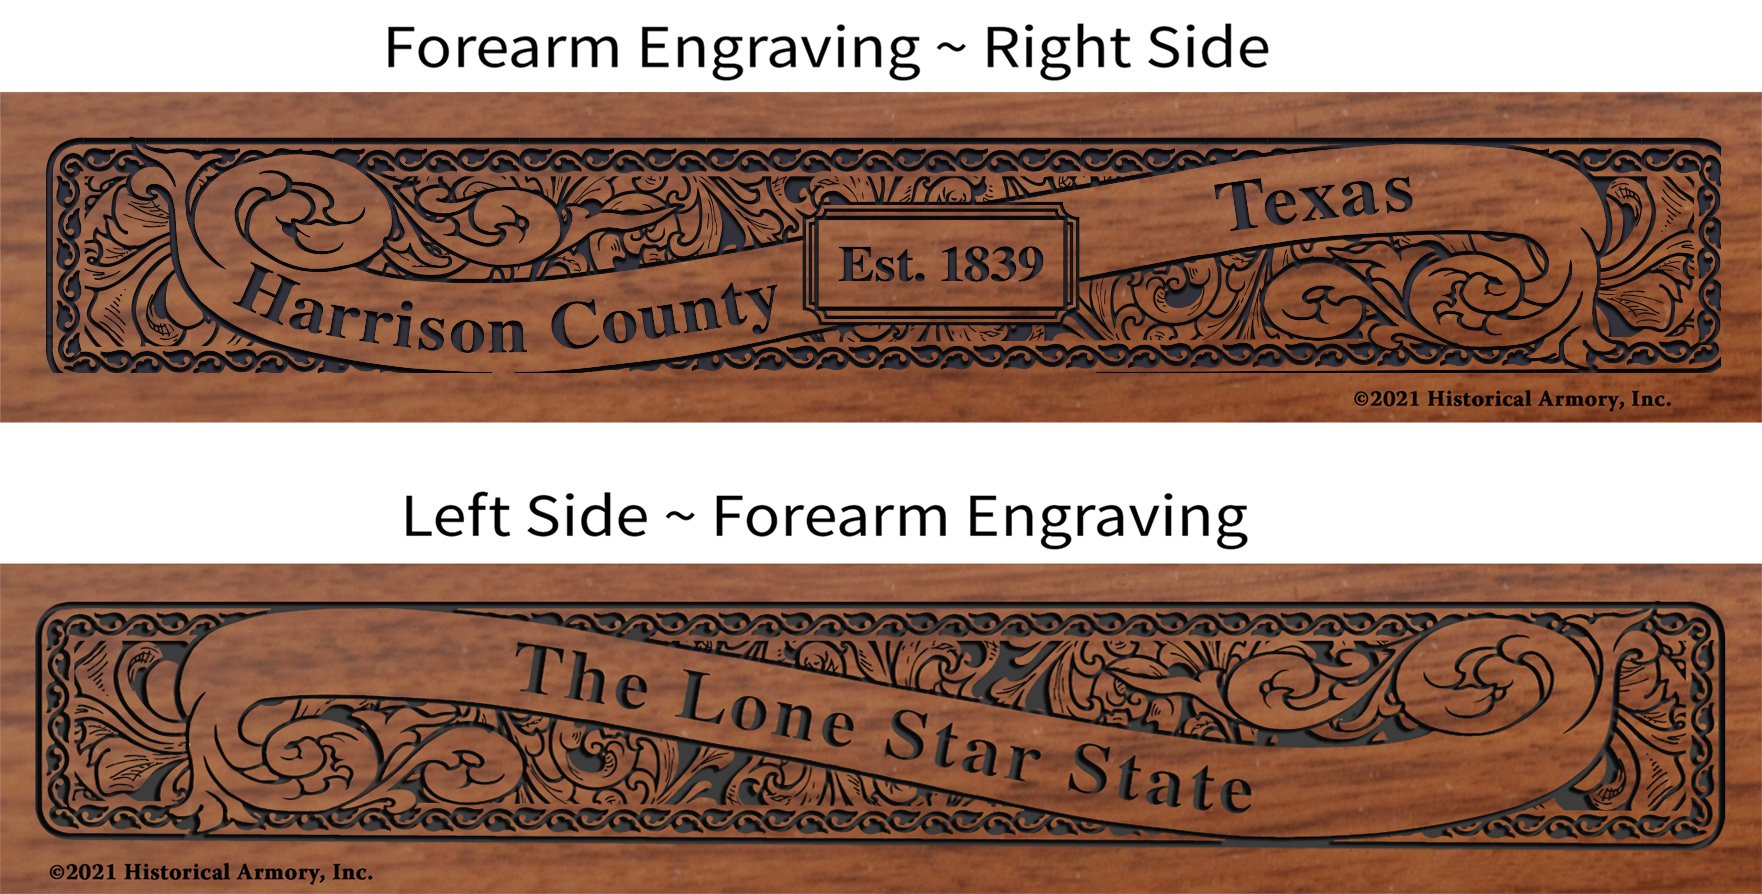 Harrison County Texas Establishment and Motto History Engraved Rifle Forearm